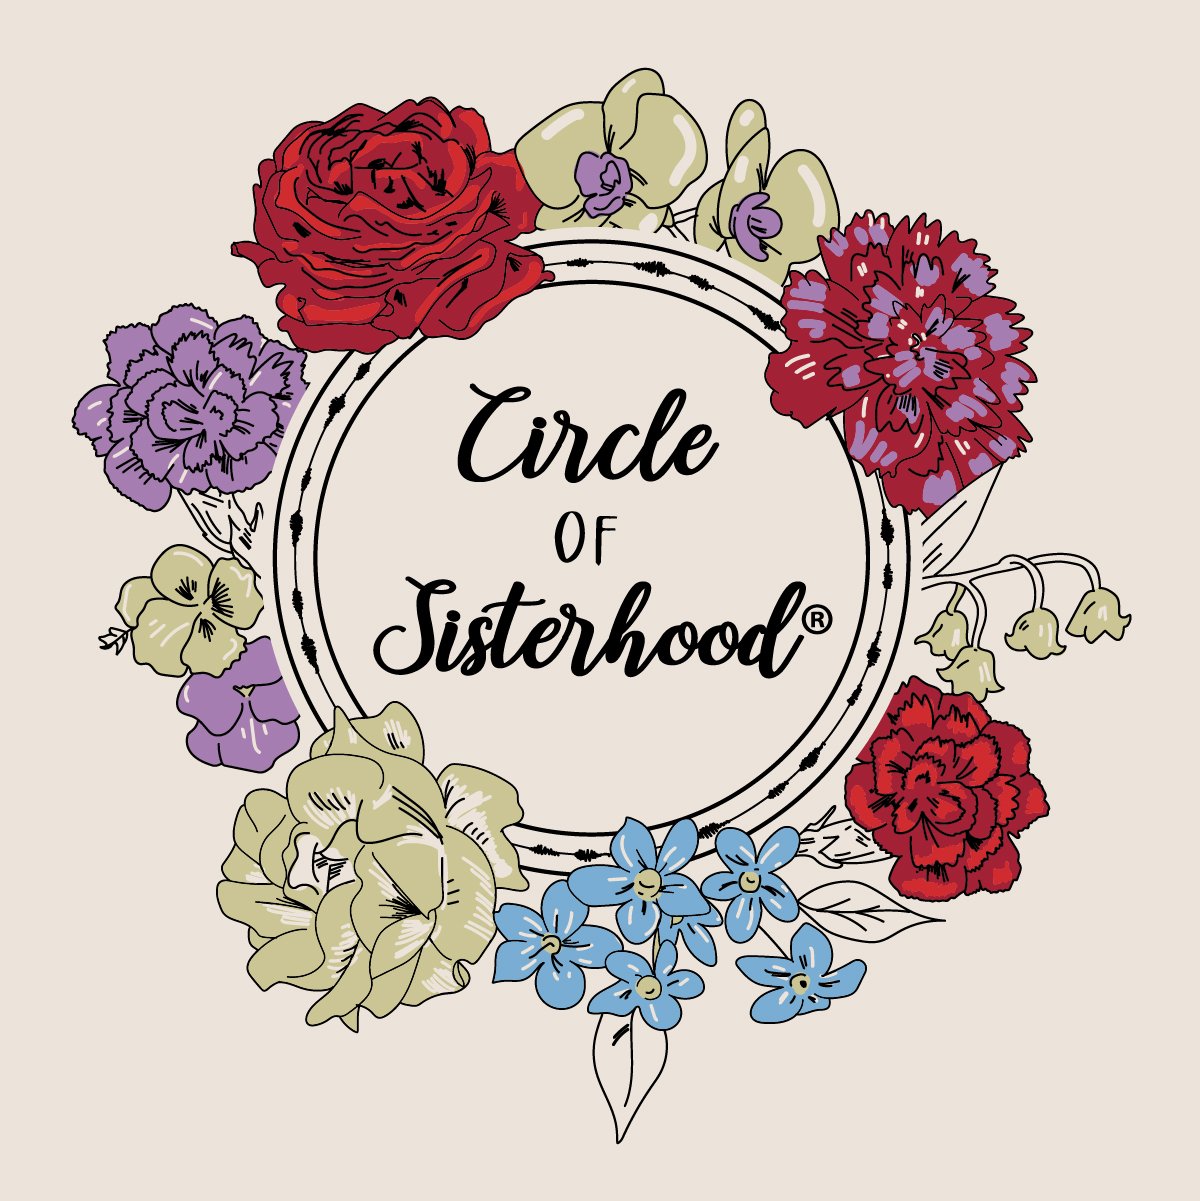 Circle of Sisterhood